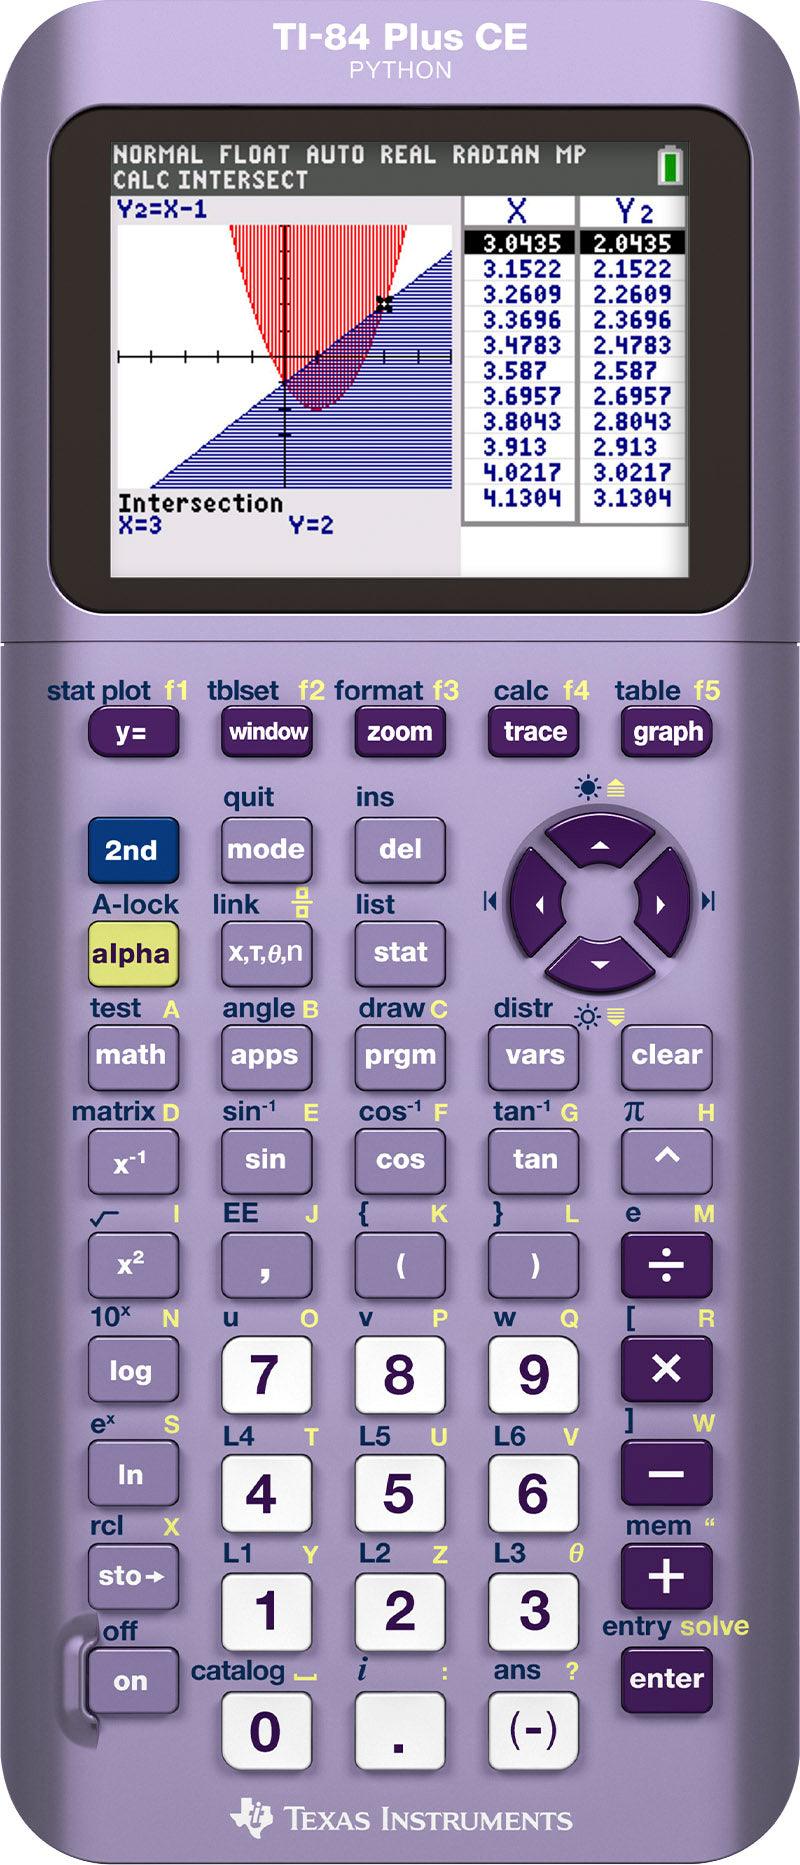 Ti-84 Plus CE Python Graphing Calculator - Infinity Iris - Underwood Distributing Co.